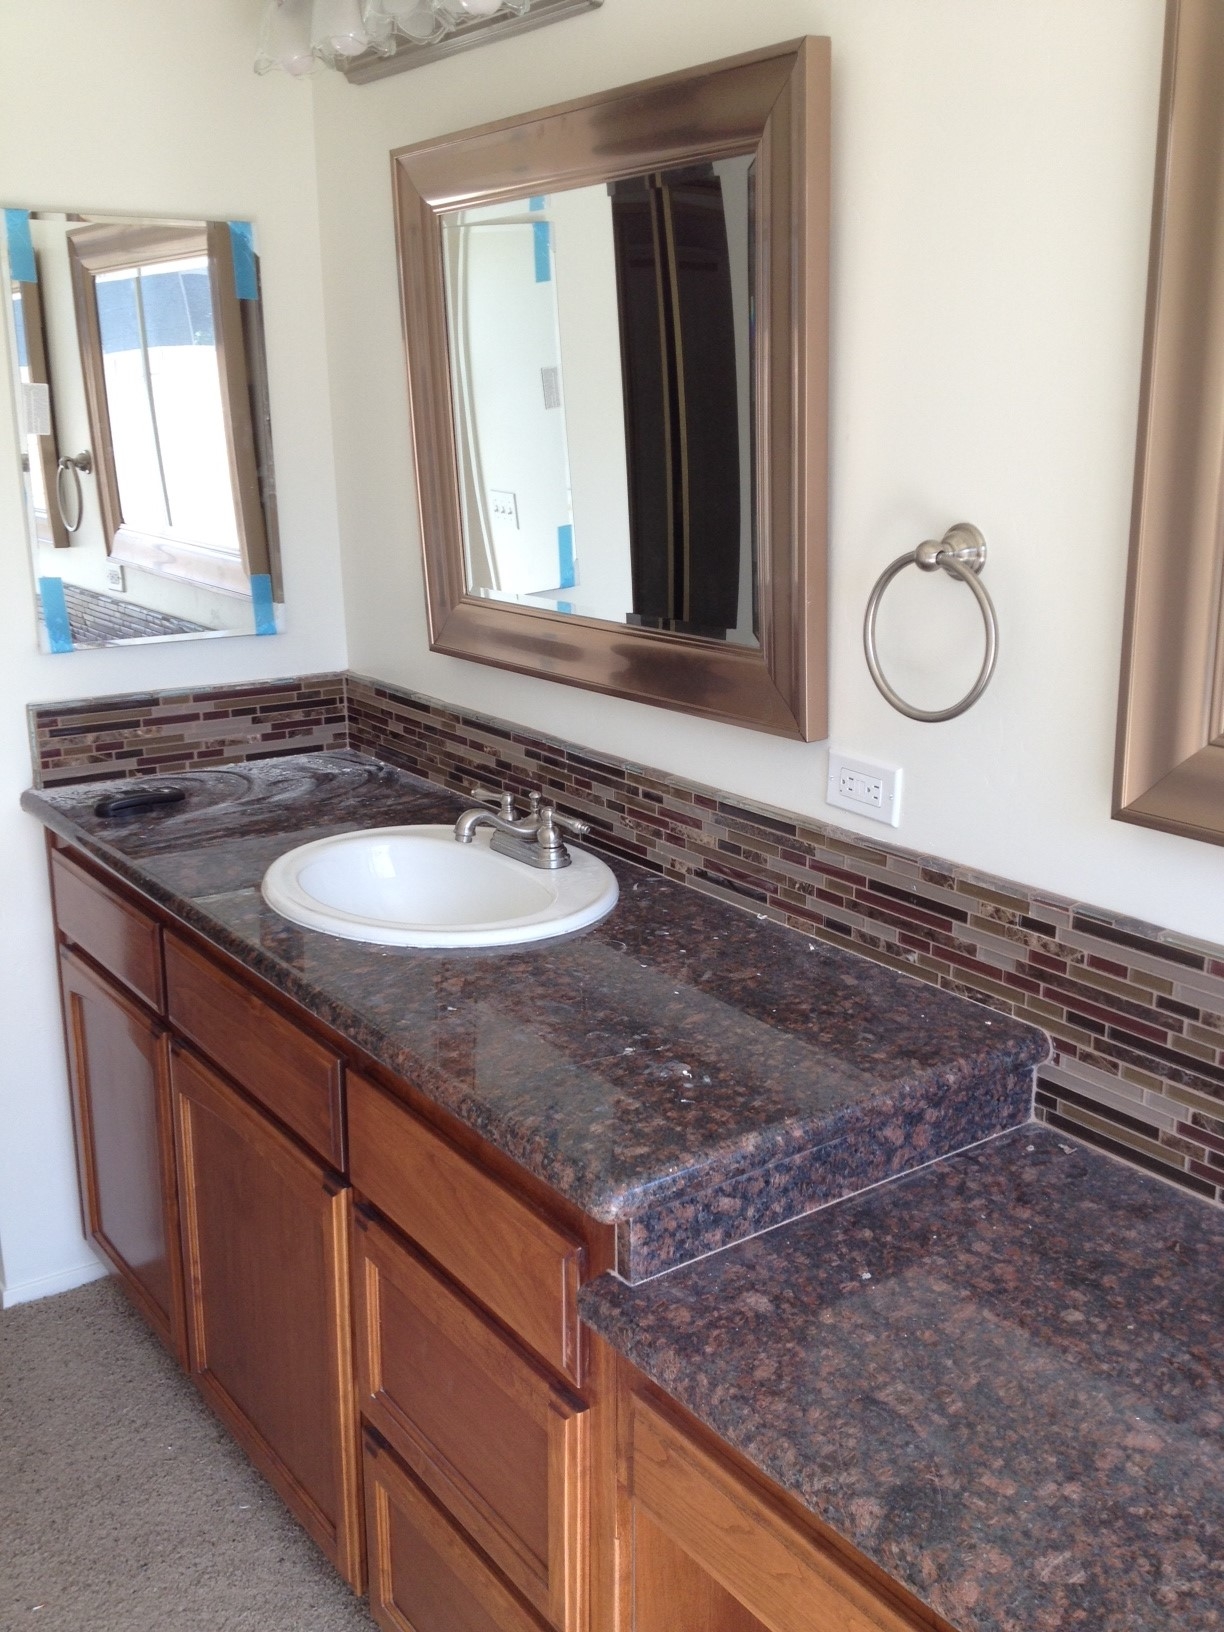 Bathroom Remodel (finish) Advanced Plumbing Service Bakersfield (661)834-0424